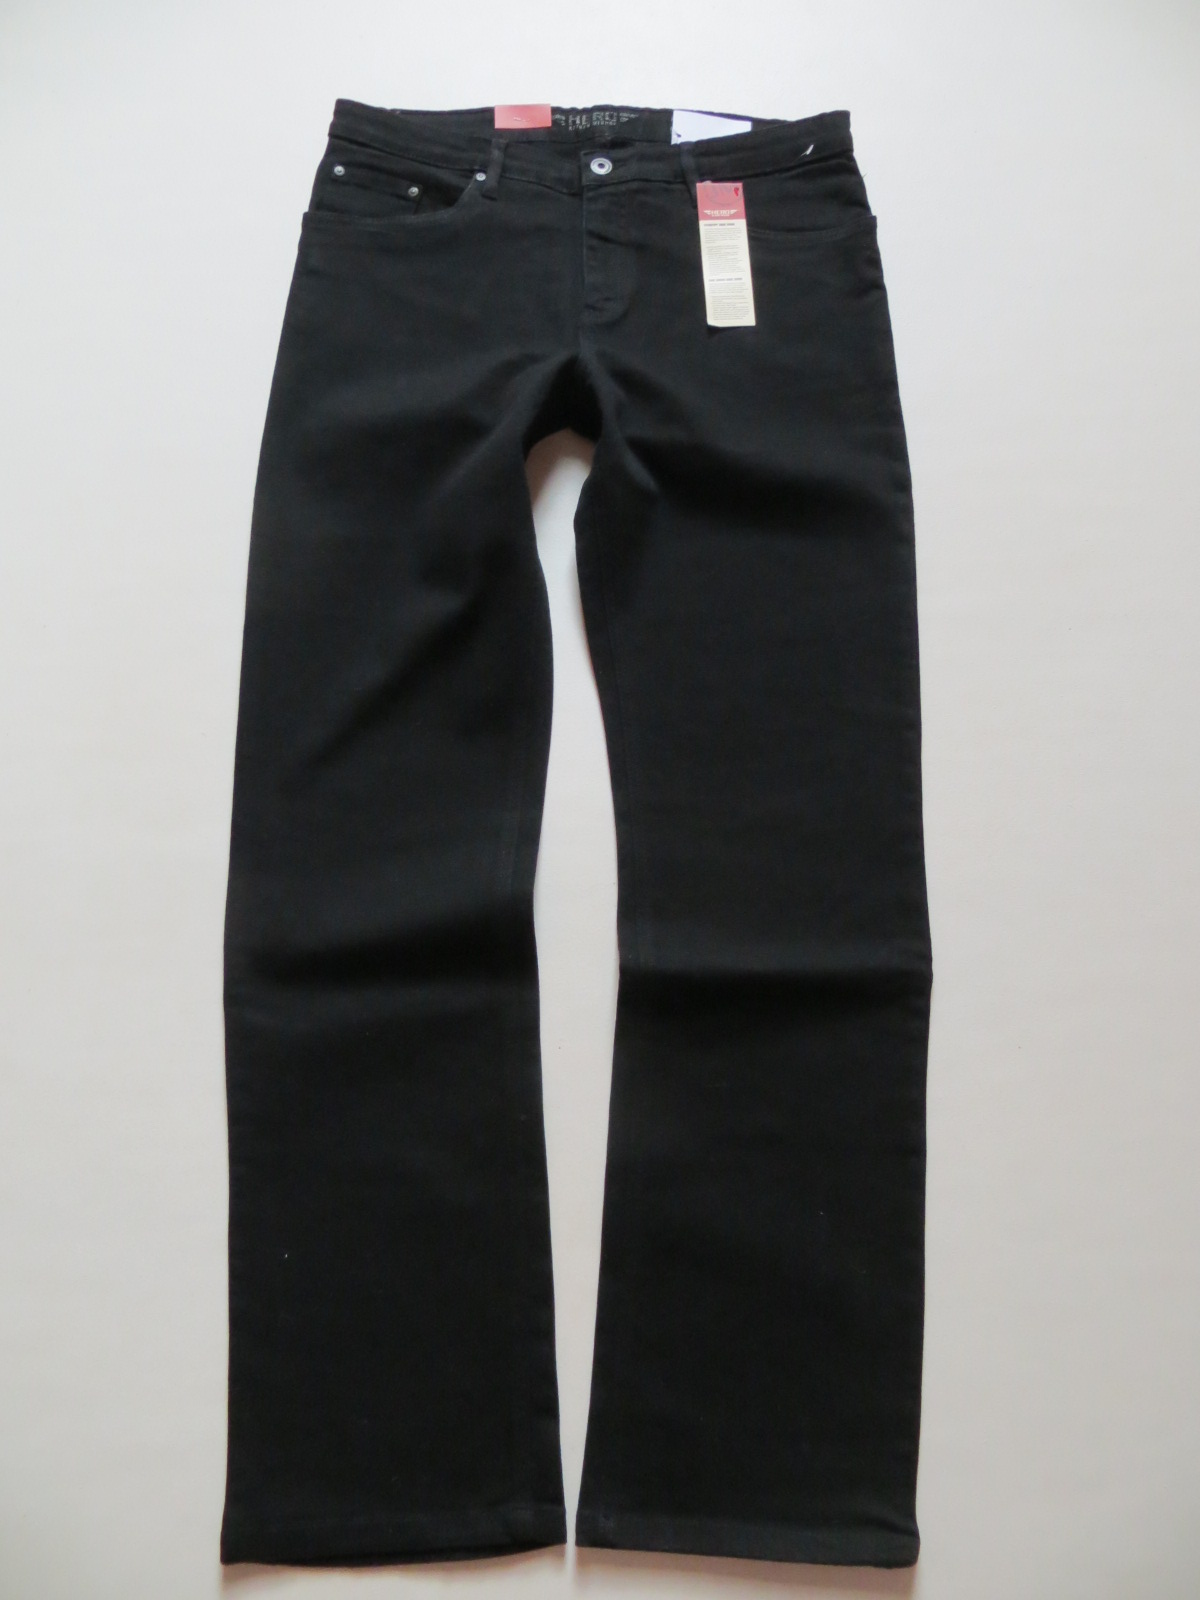 Hero medoox Denver Jeans Trousers W 36/L 34, BLACK! NEW! Black Stretch ...